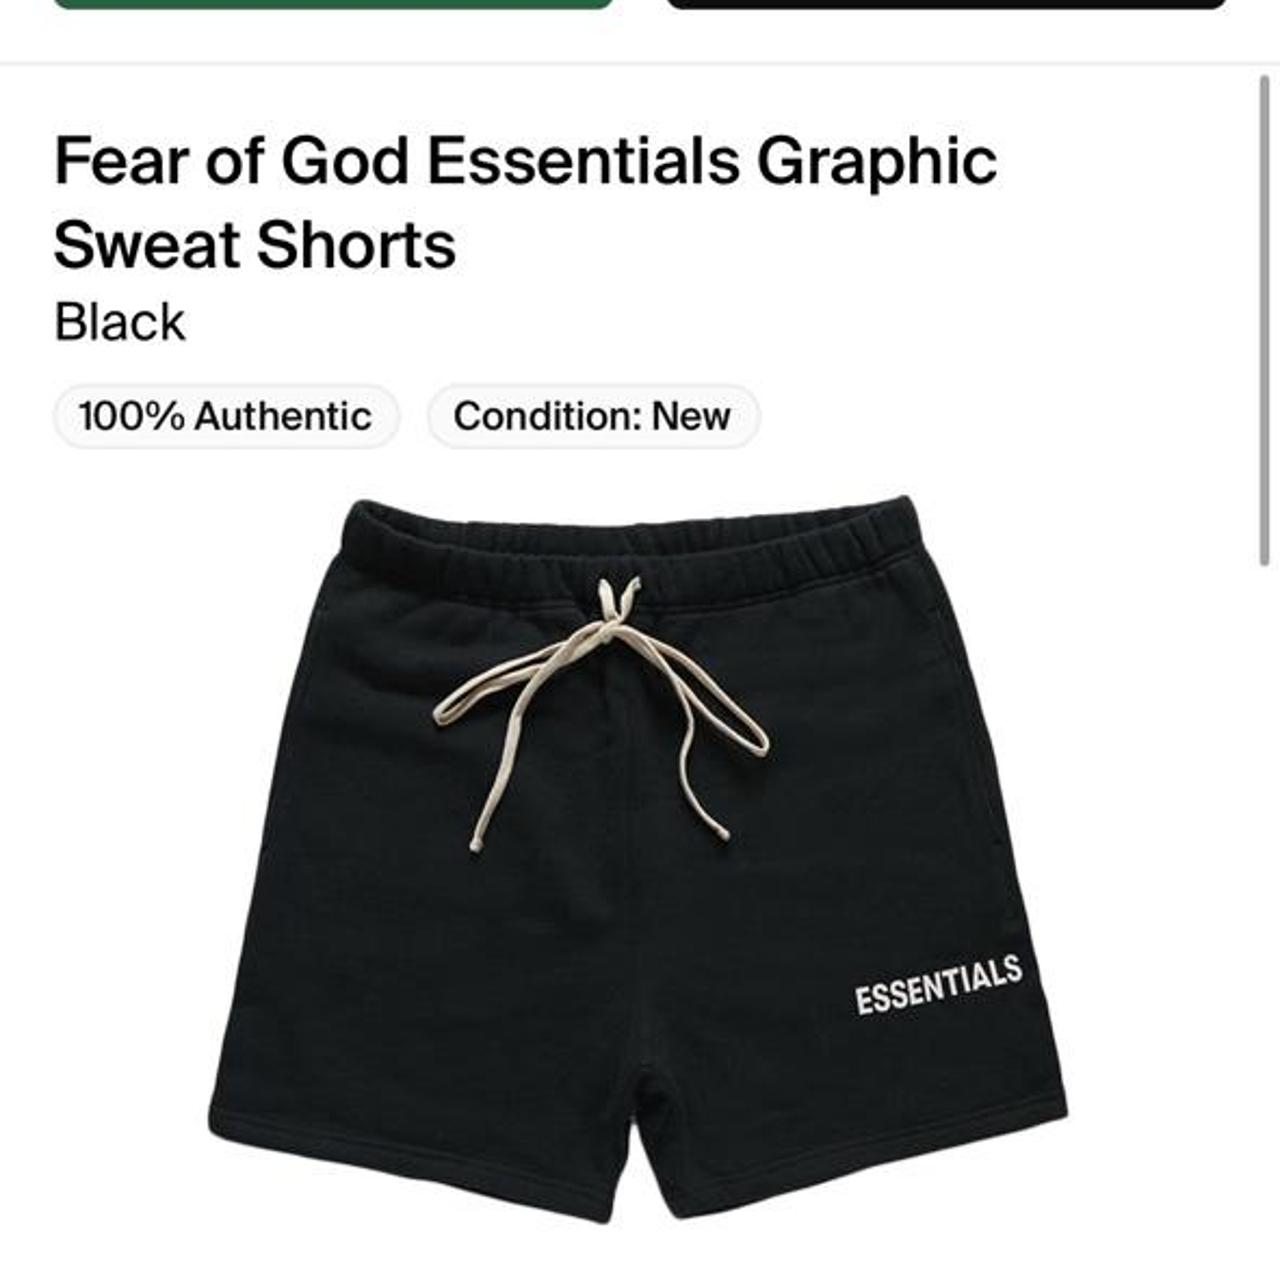 Fear of God Essentials Graphic Sweat Shorts Black Men's